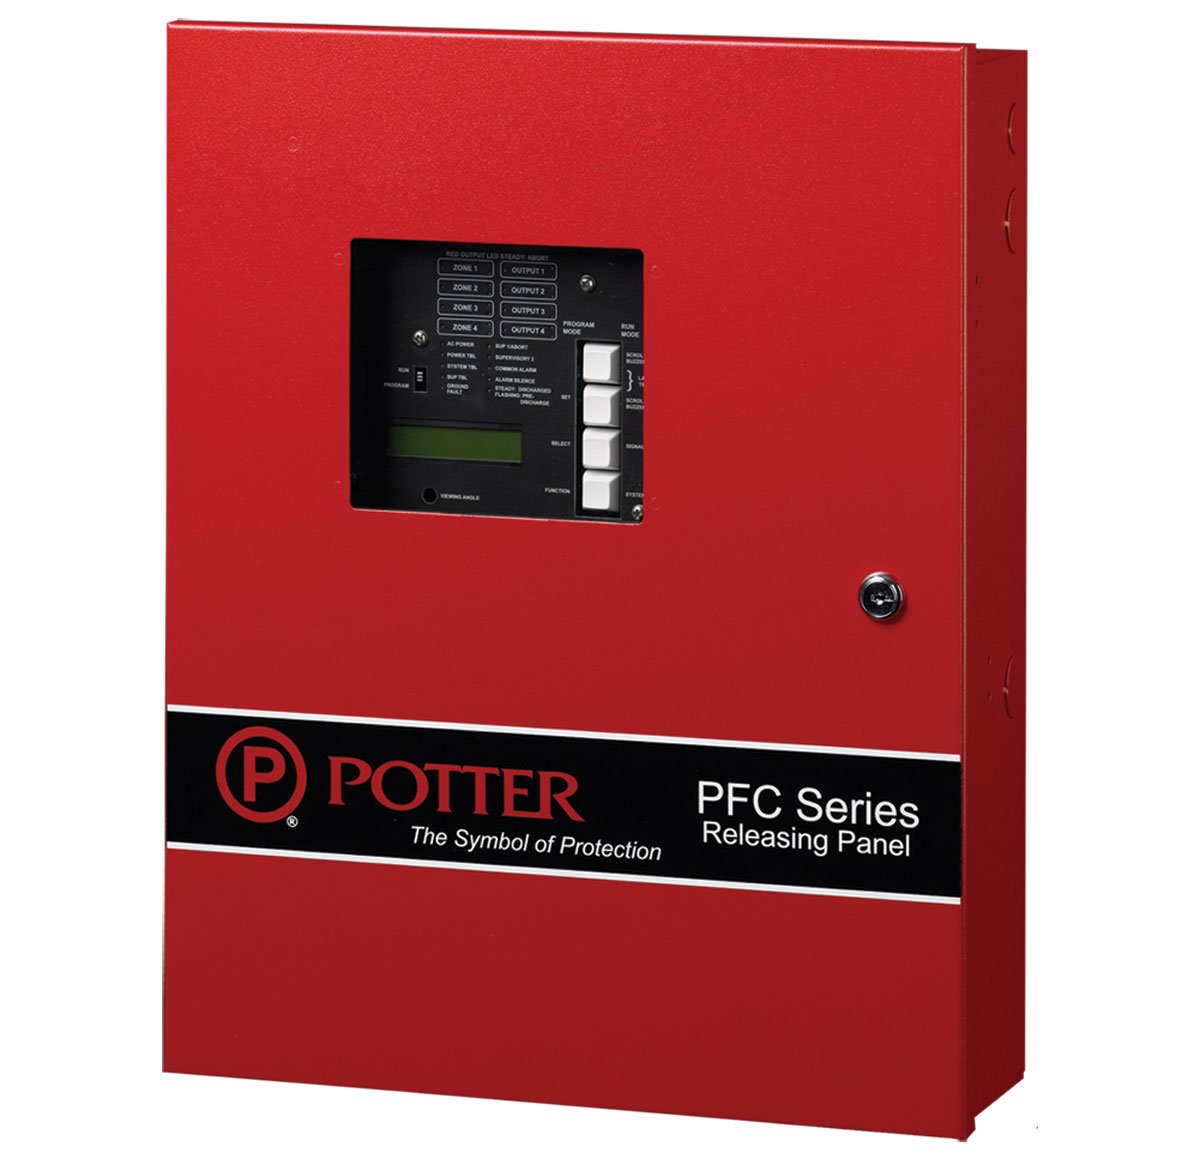 Potter’s model PFC-4410RC